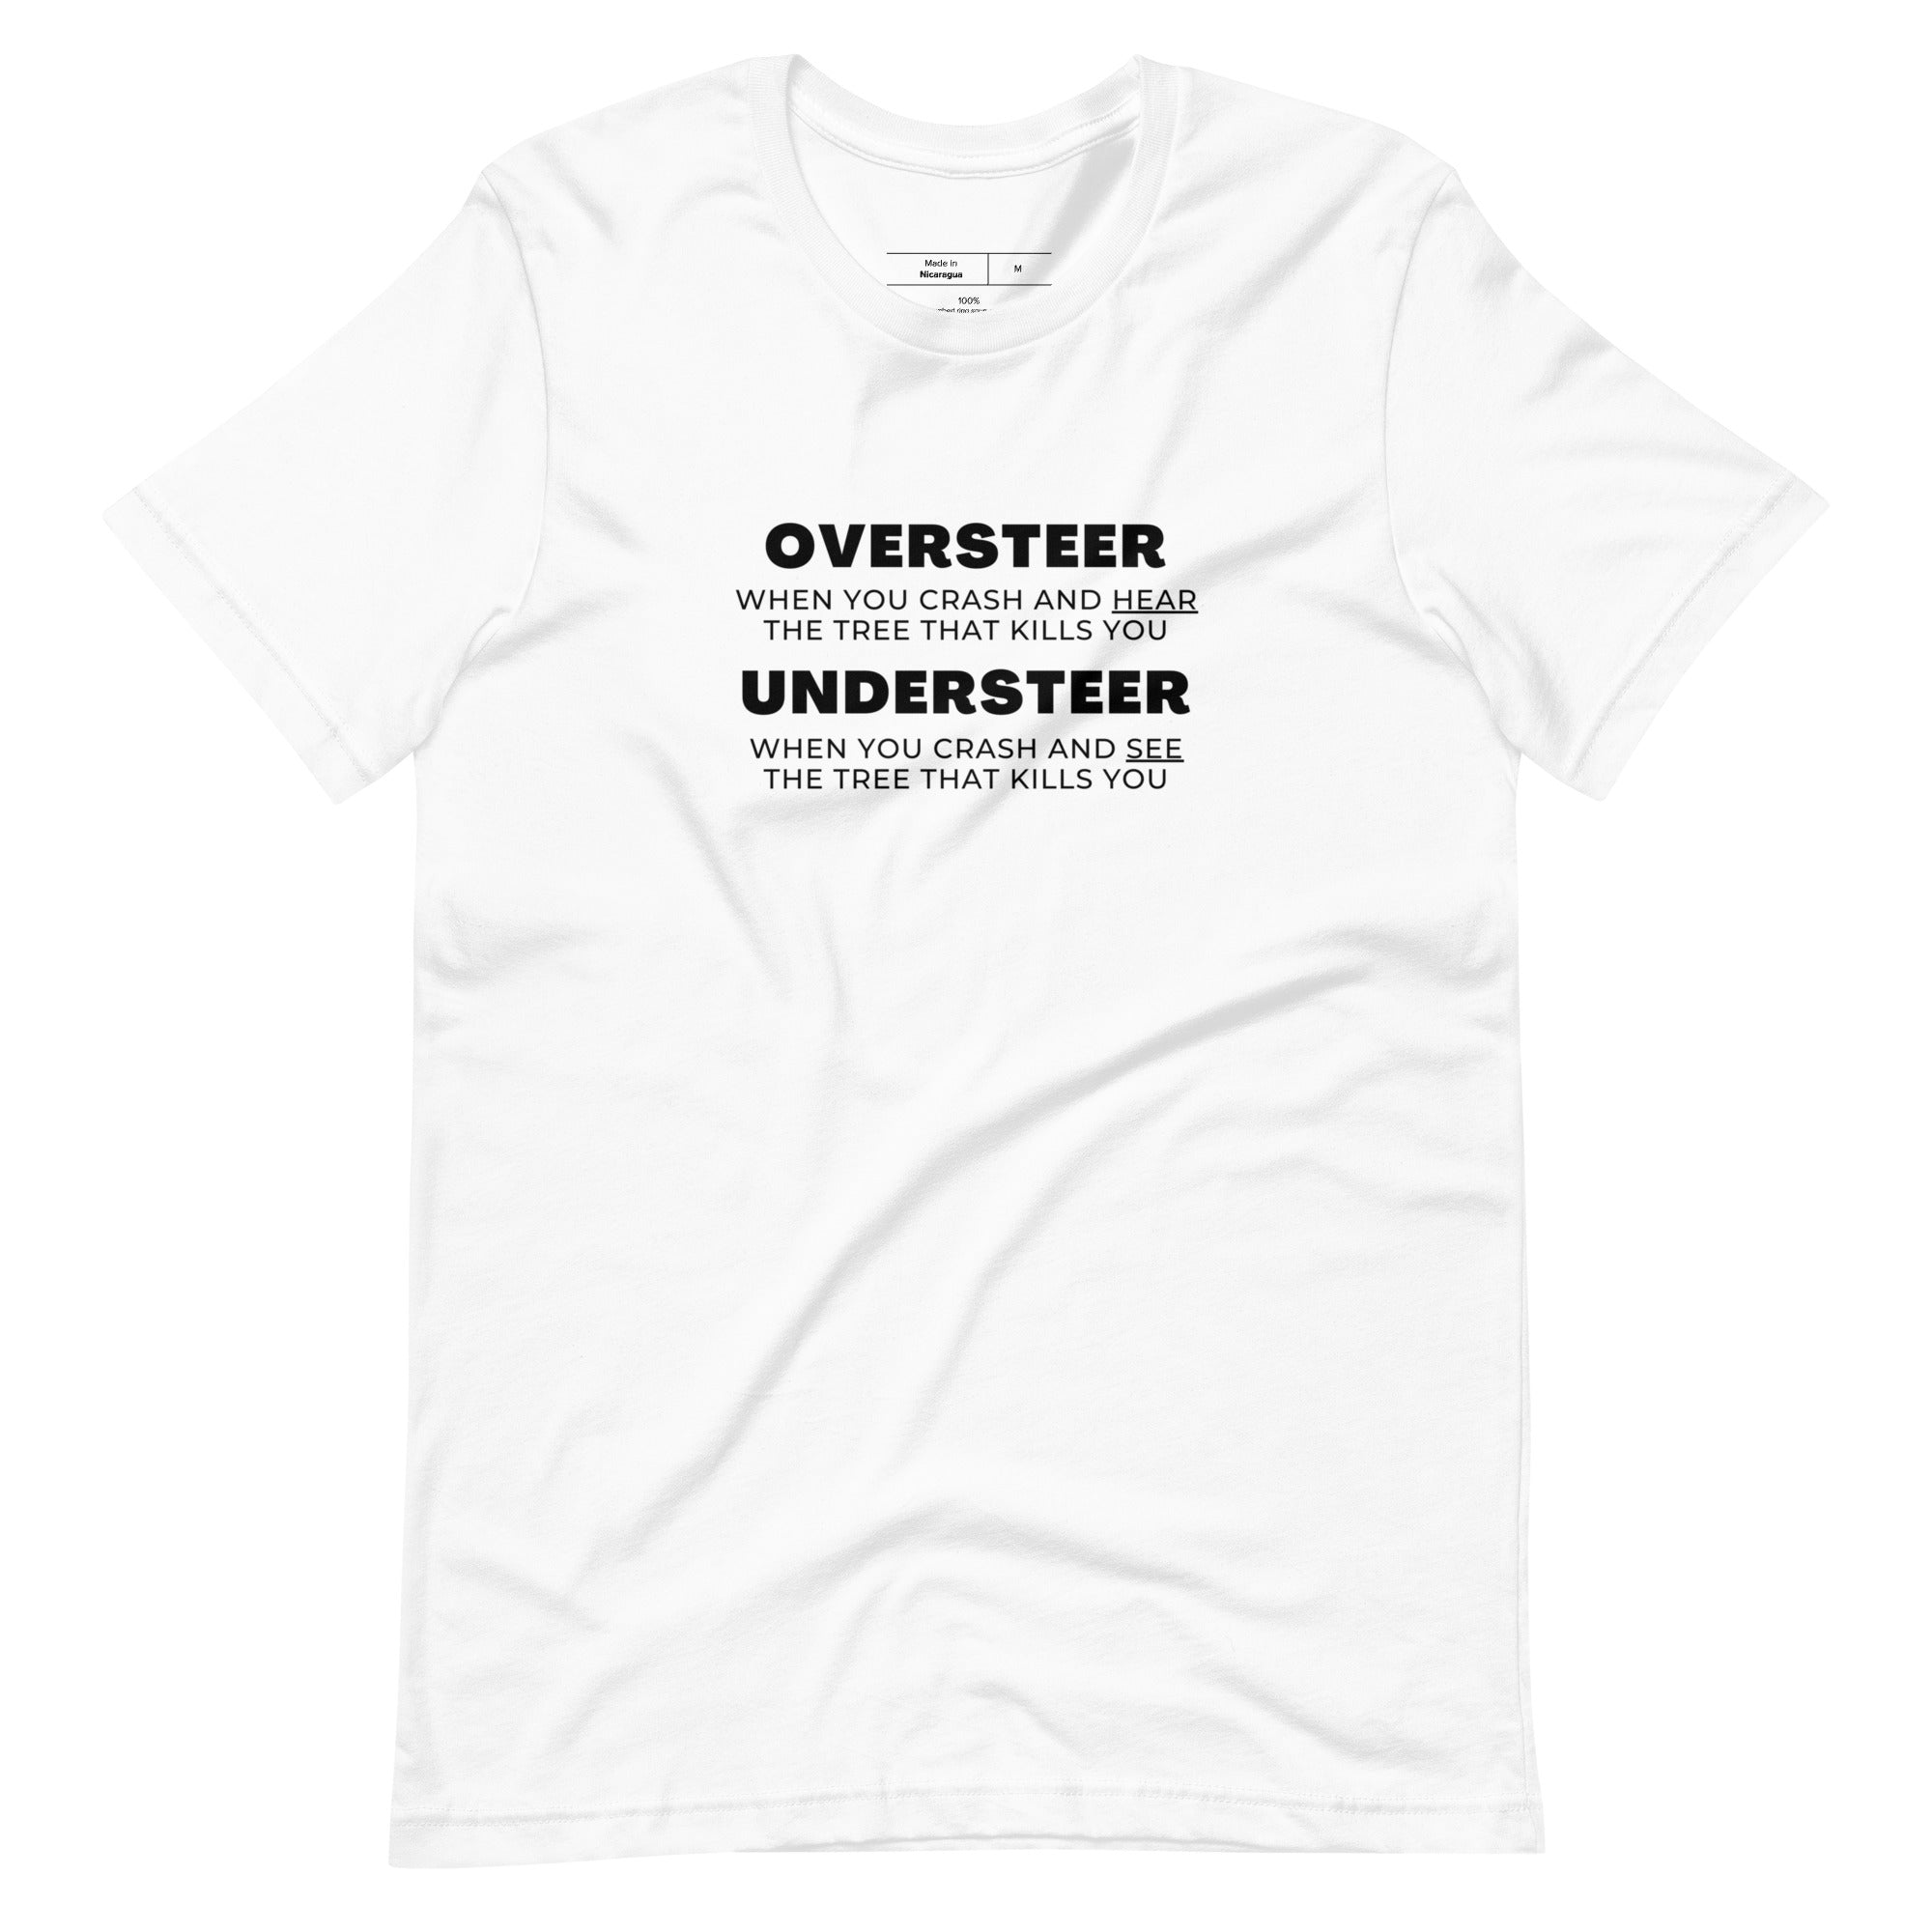 Oversteer and Understeer - The Basics